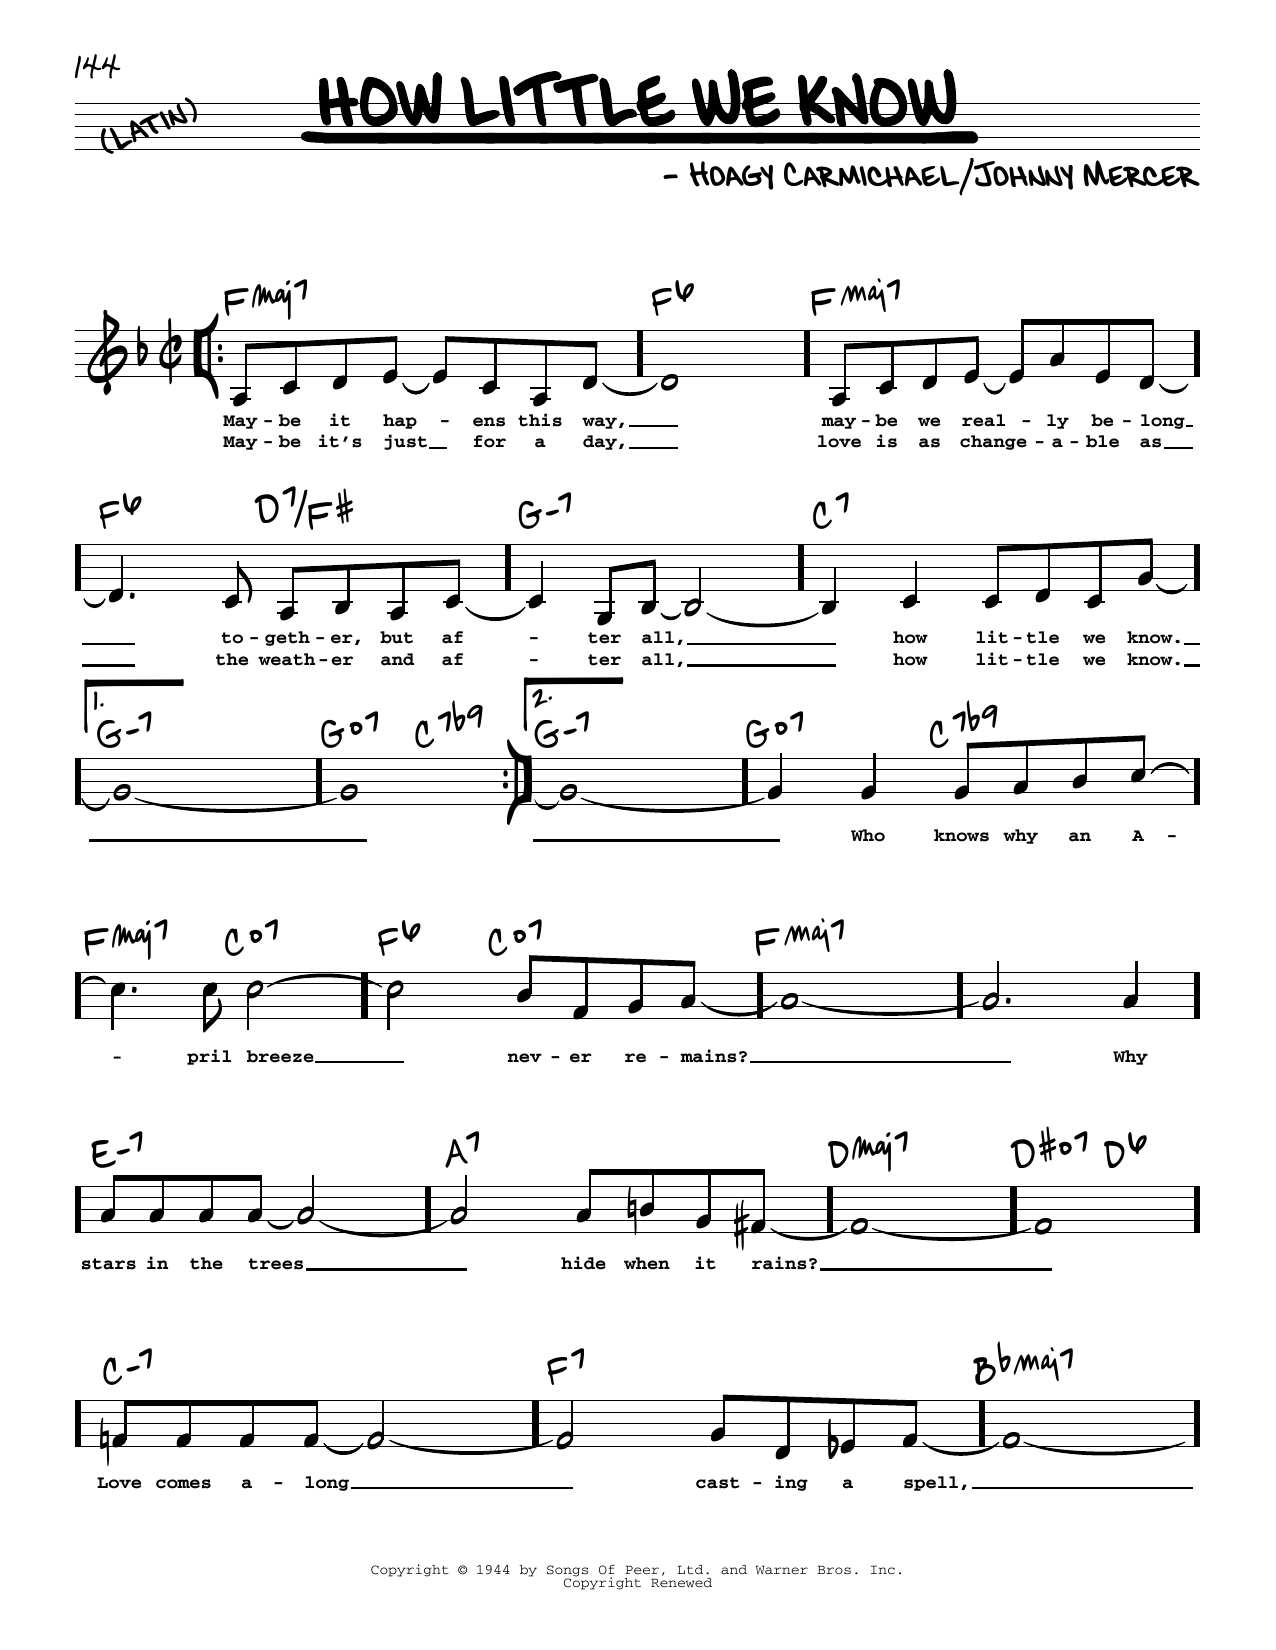 Hoagy Carmichael How Little We Know (Low Voice) sheet music notes printable PDF score